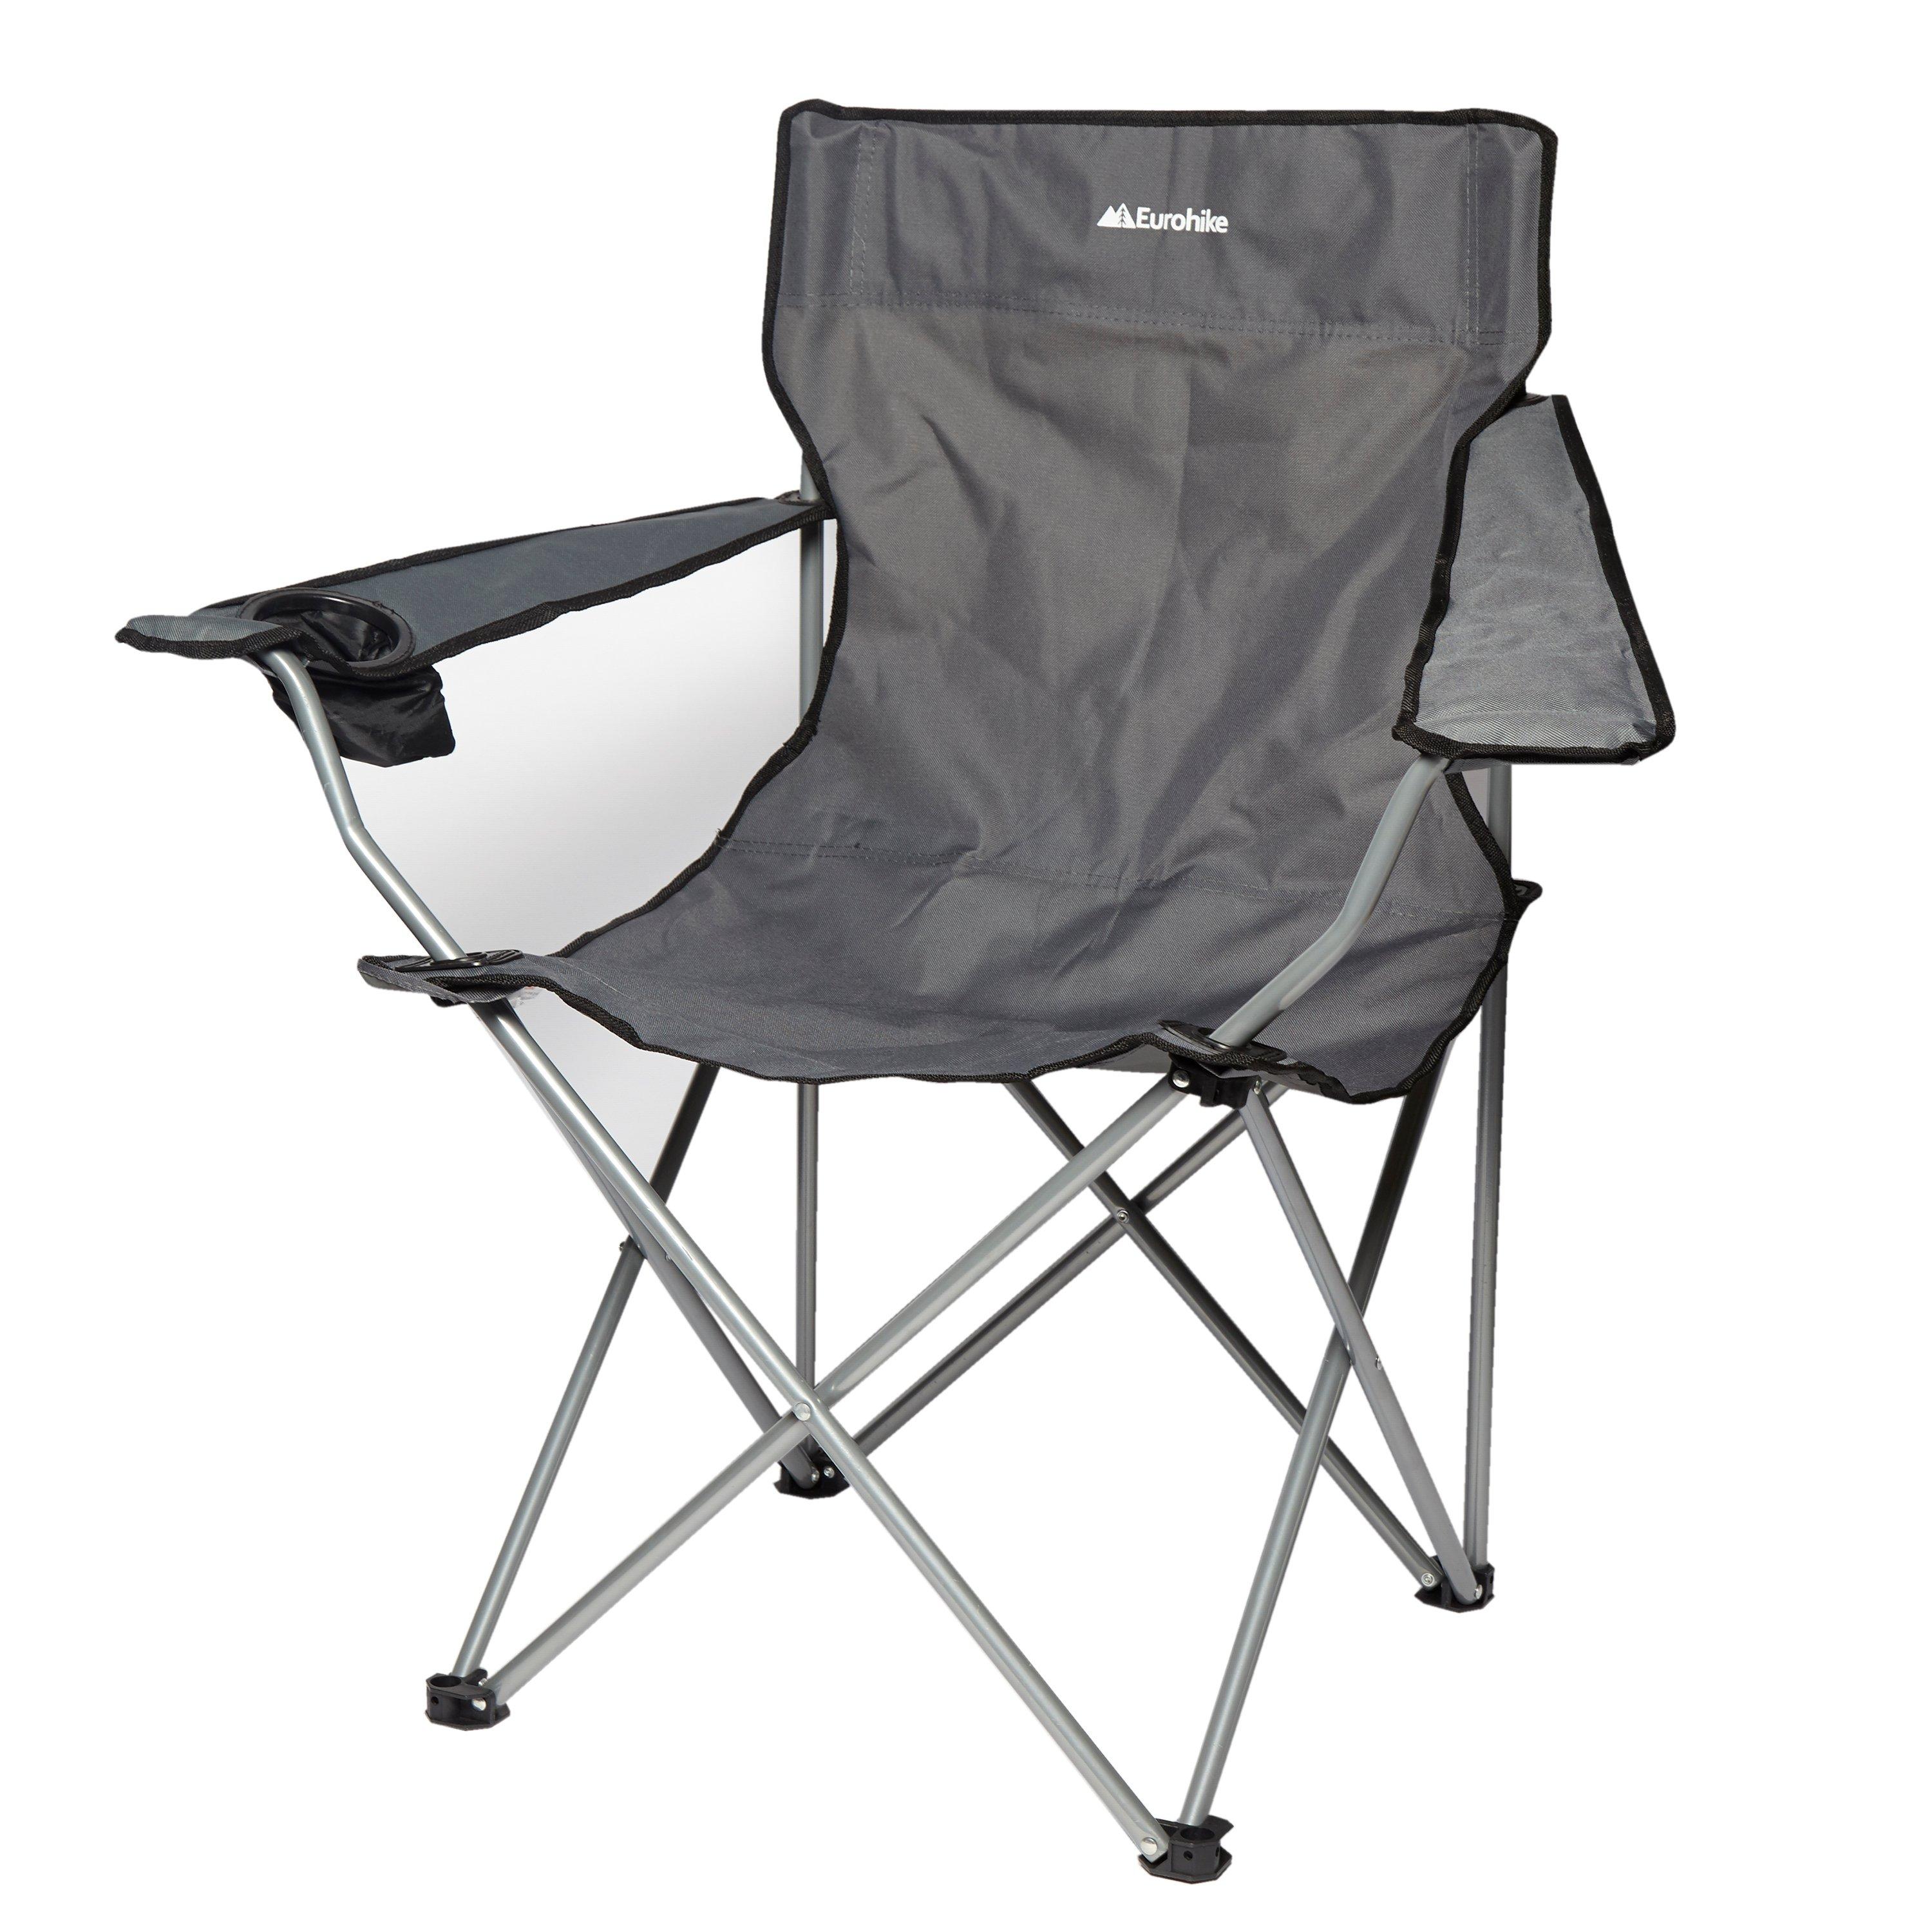 eurohike camping chairs